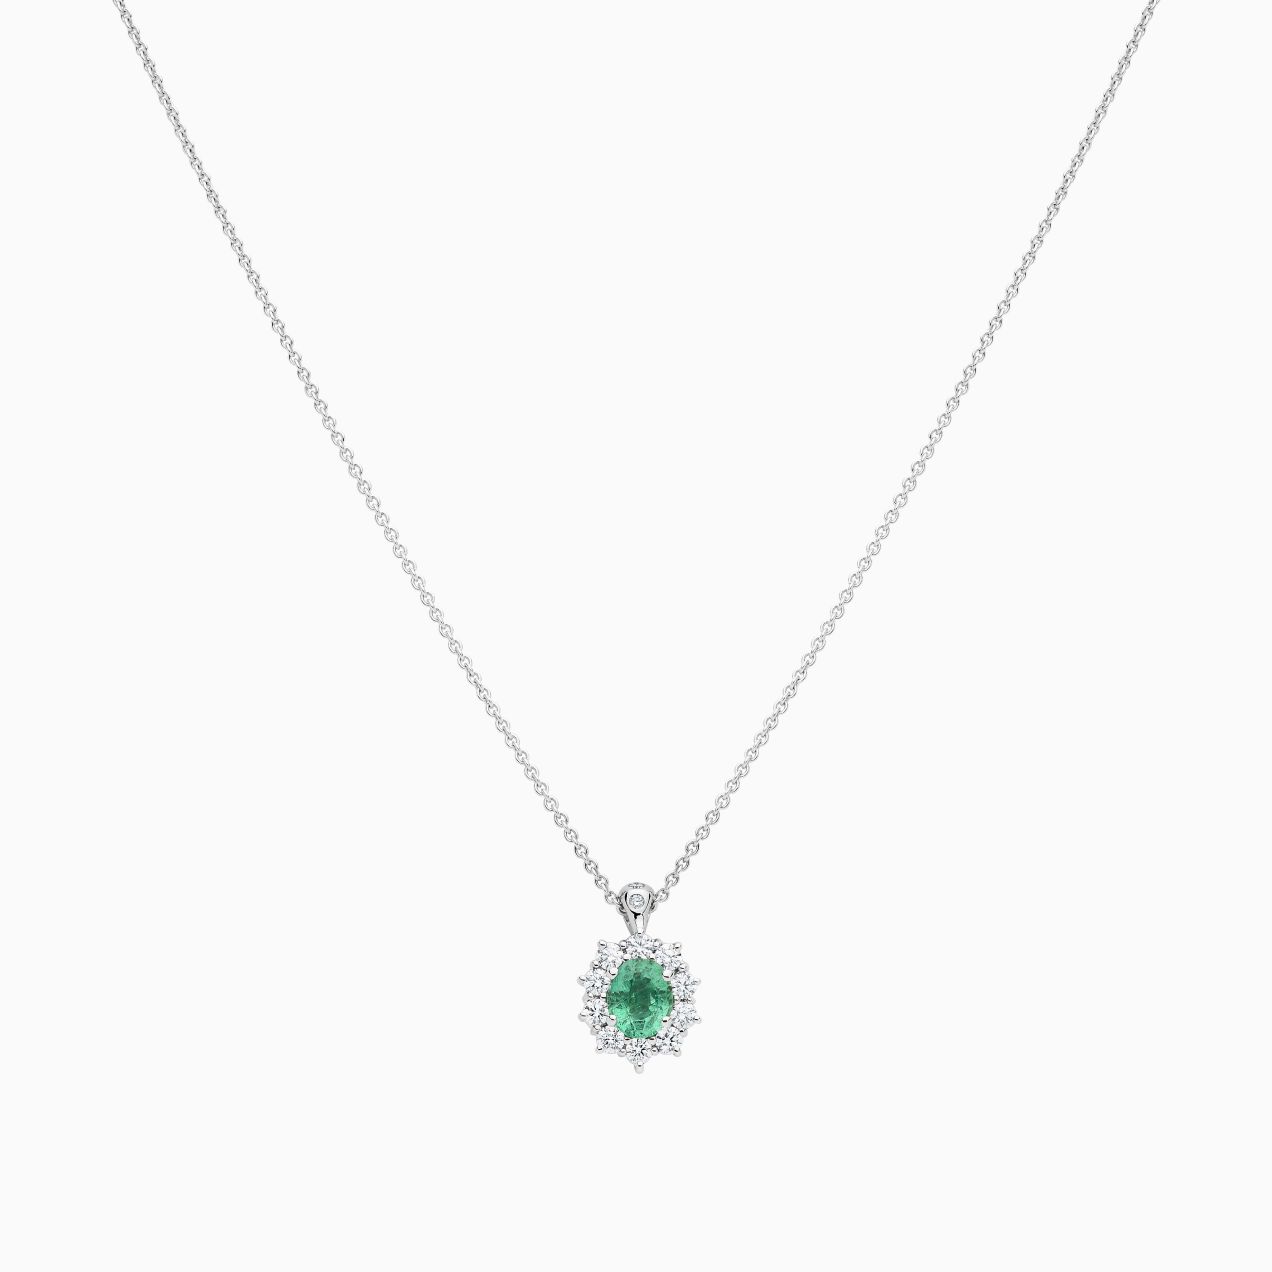 Emerald and diamonds pendant